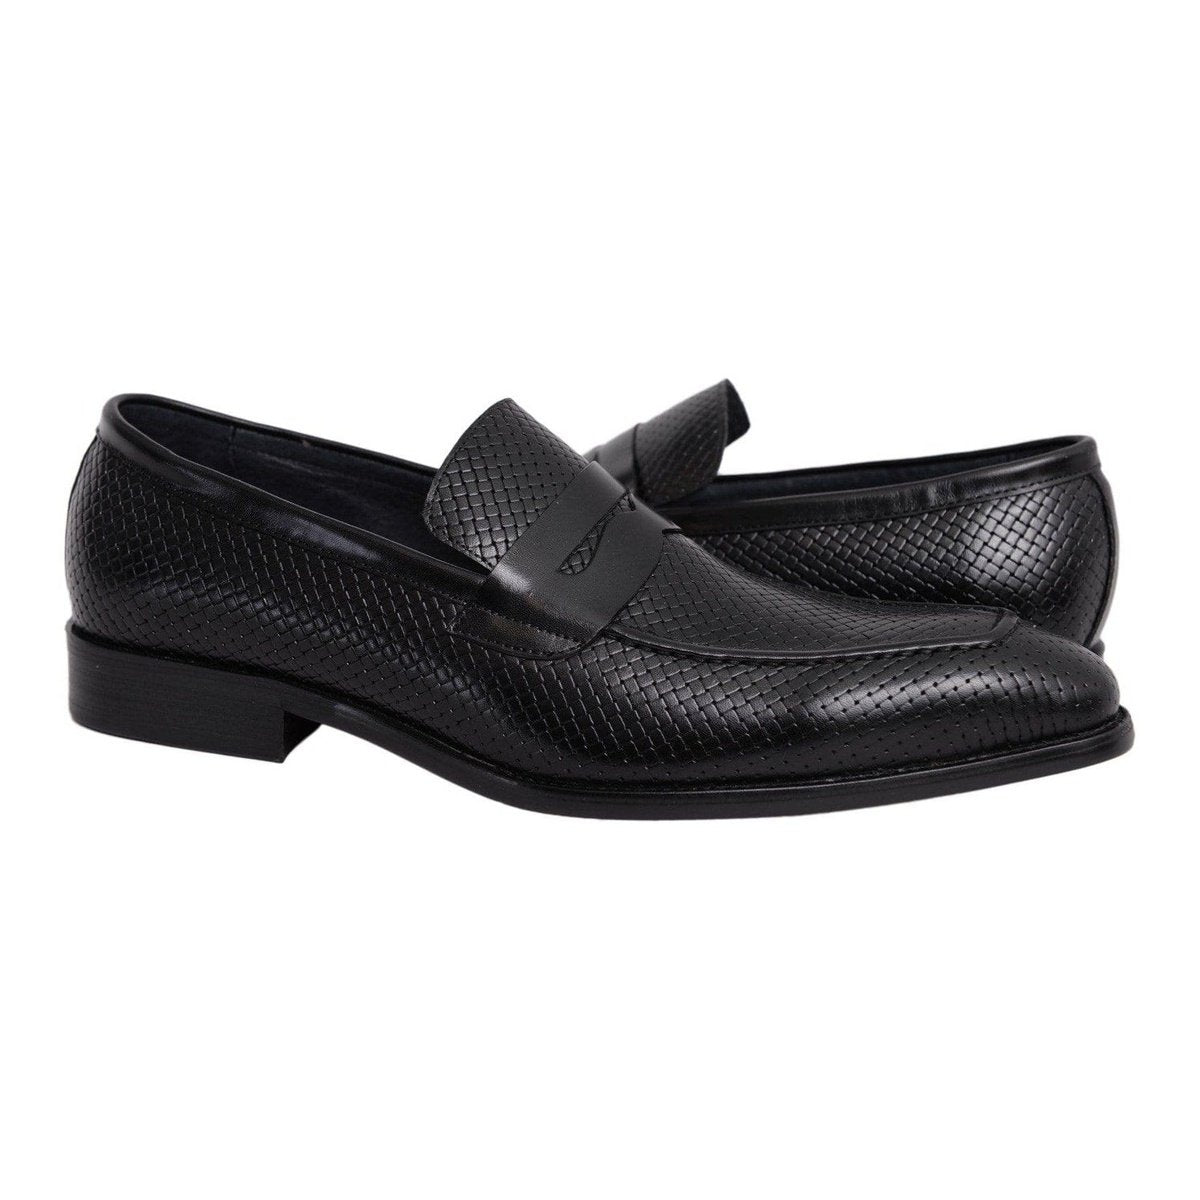 Carrucci SHOES 9 / 9 D-M Mens Carrucci Textured Black Slip-on Leather Dress Shoes